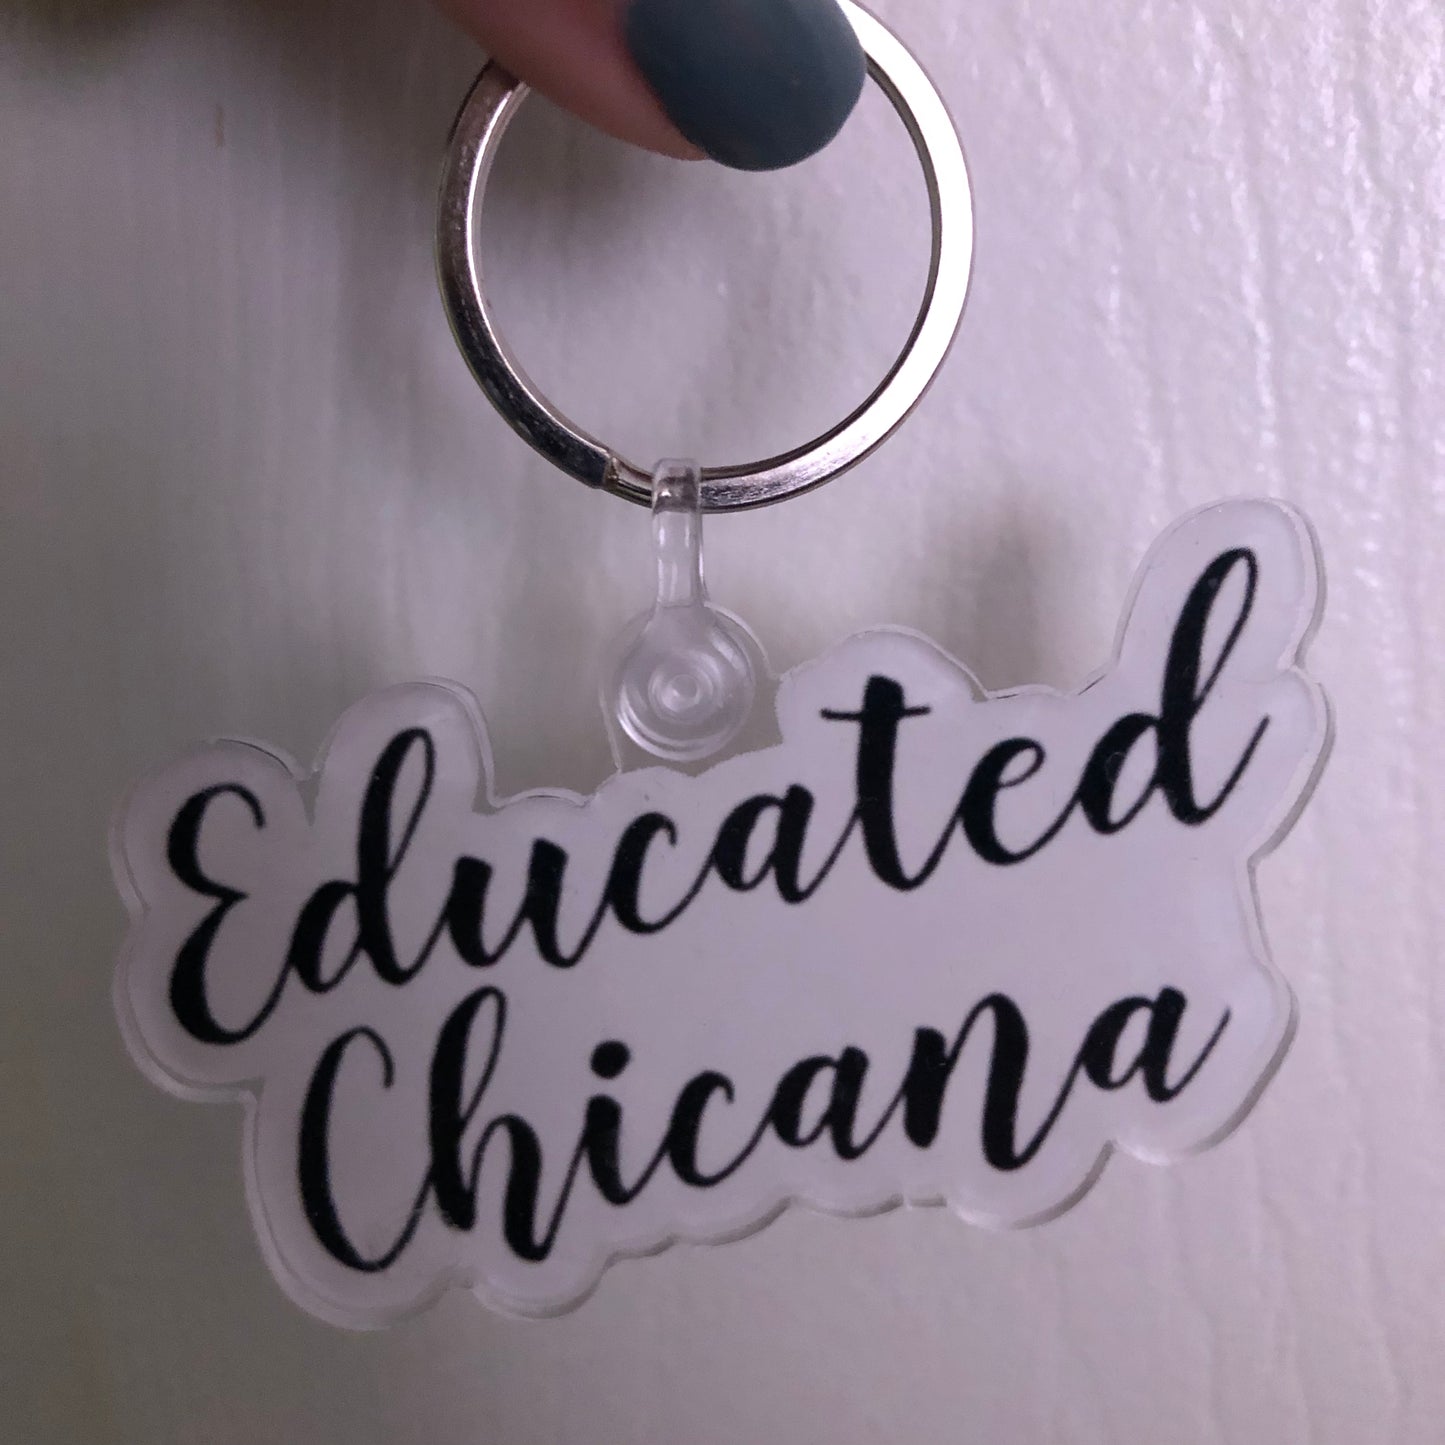 Educated Chicana keychain